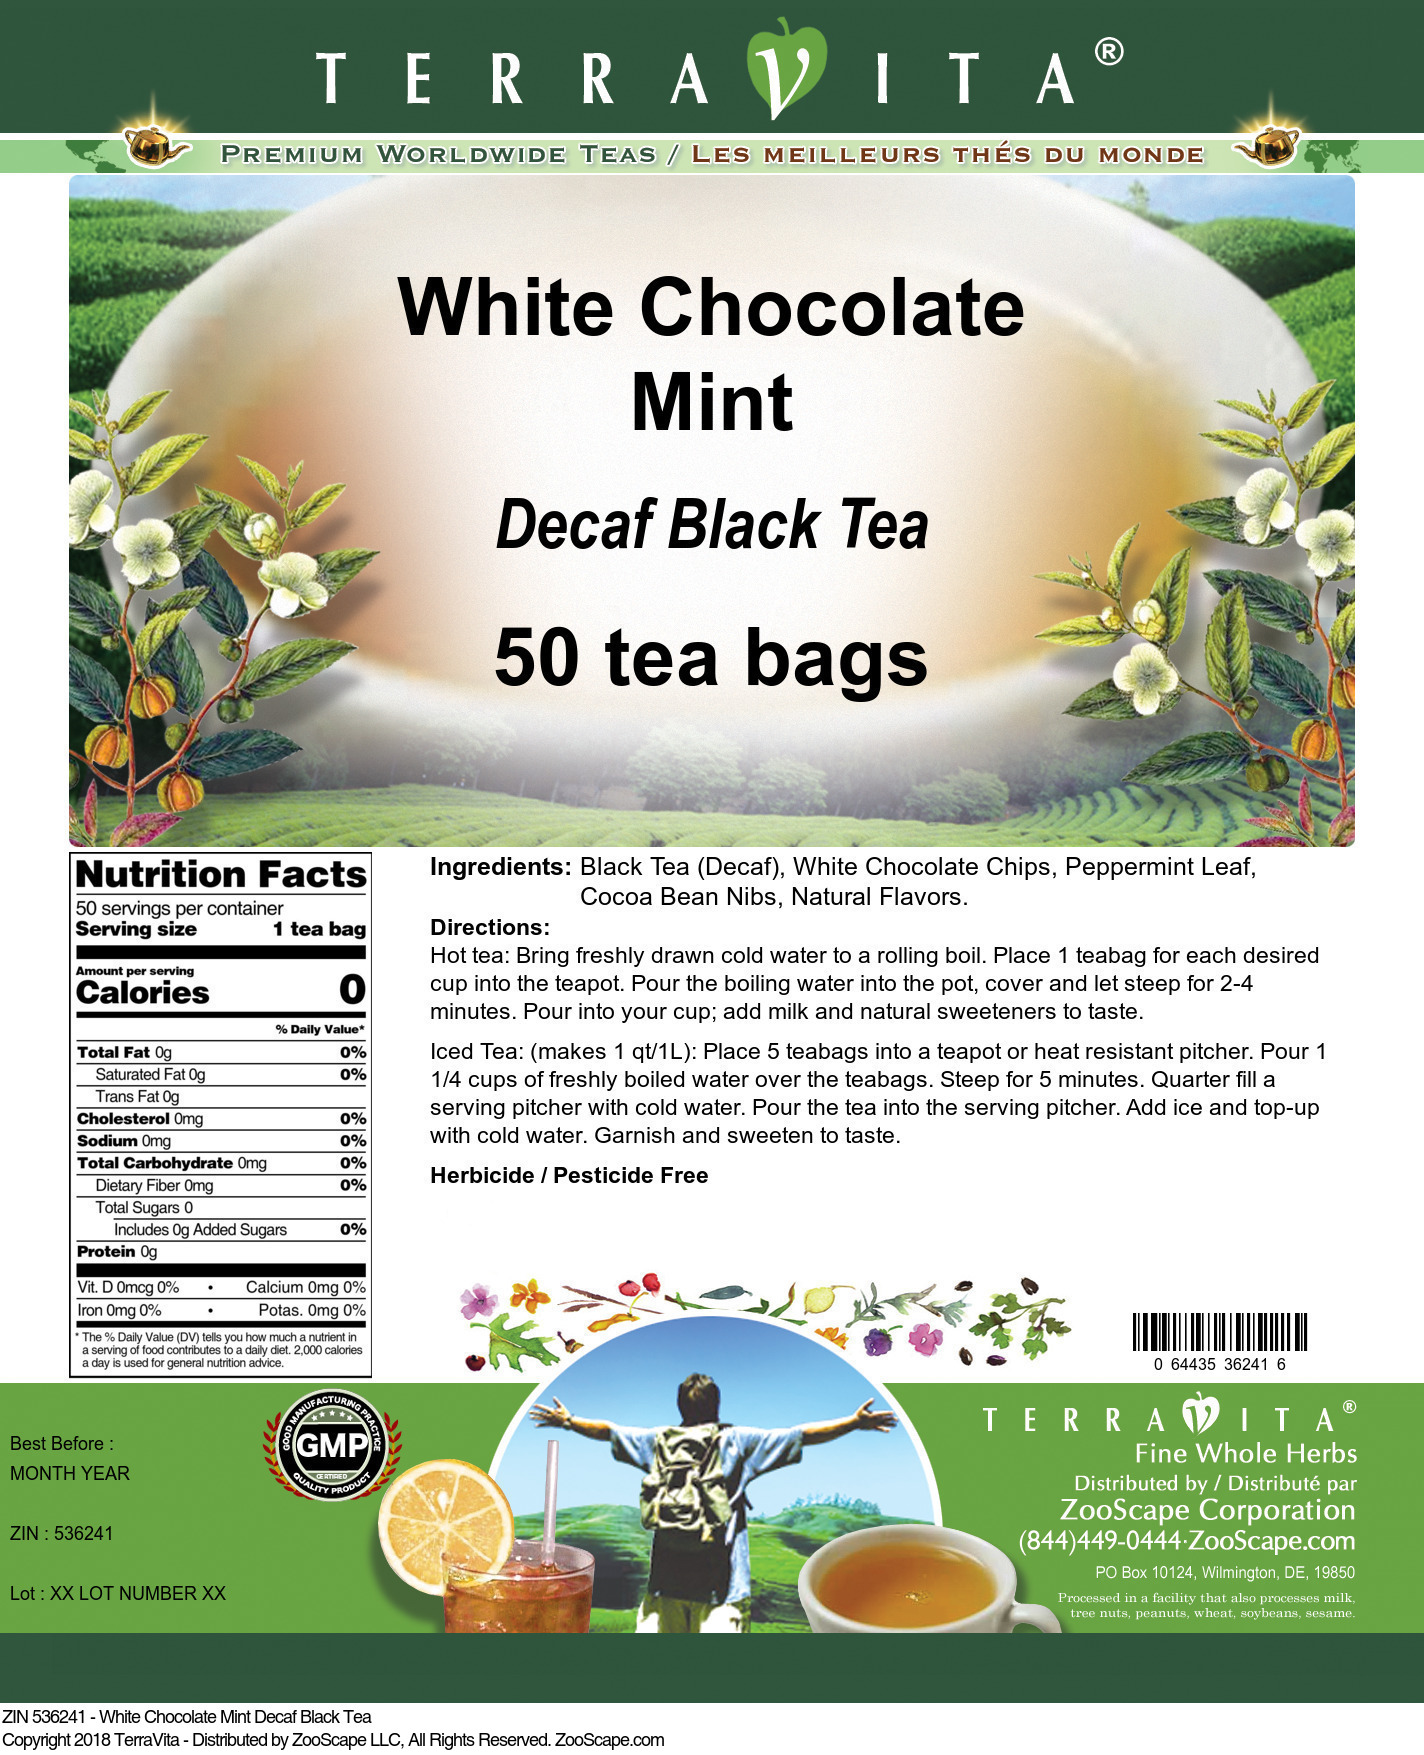 White Chocolate Mint Decaf Black Tea - Label